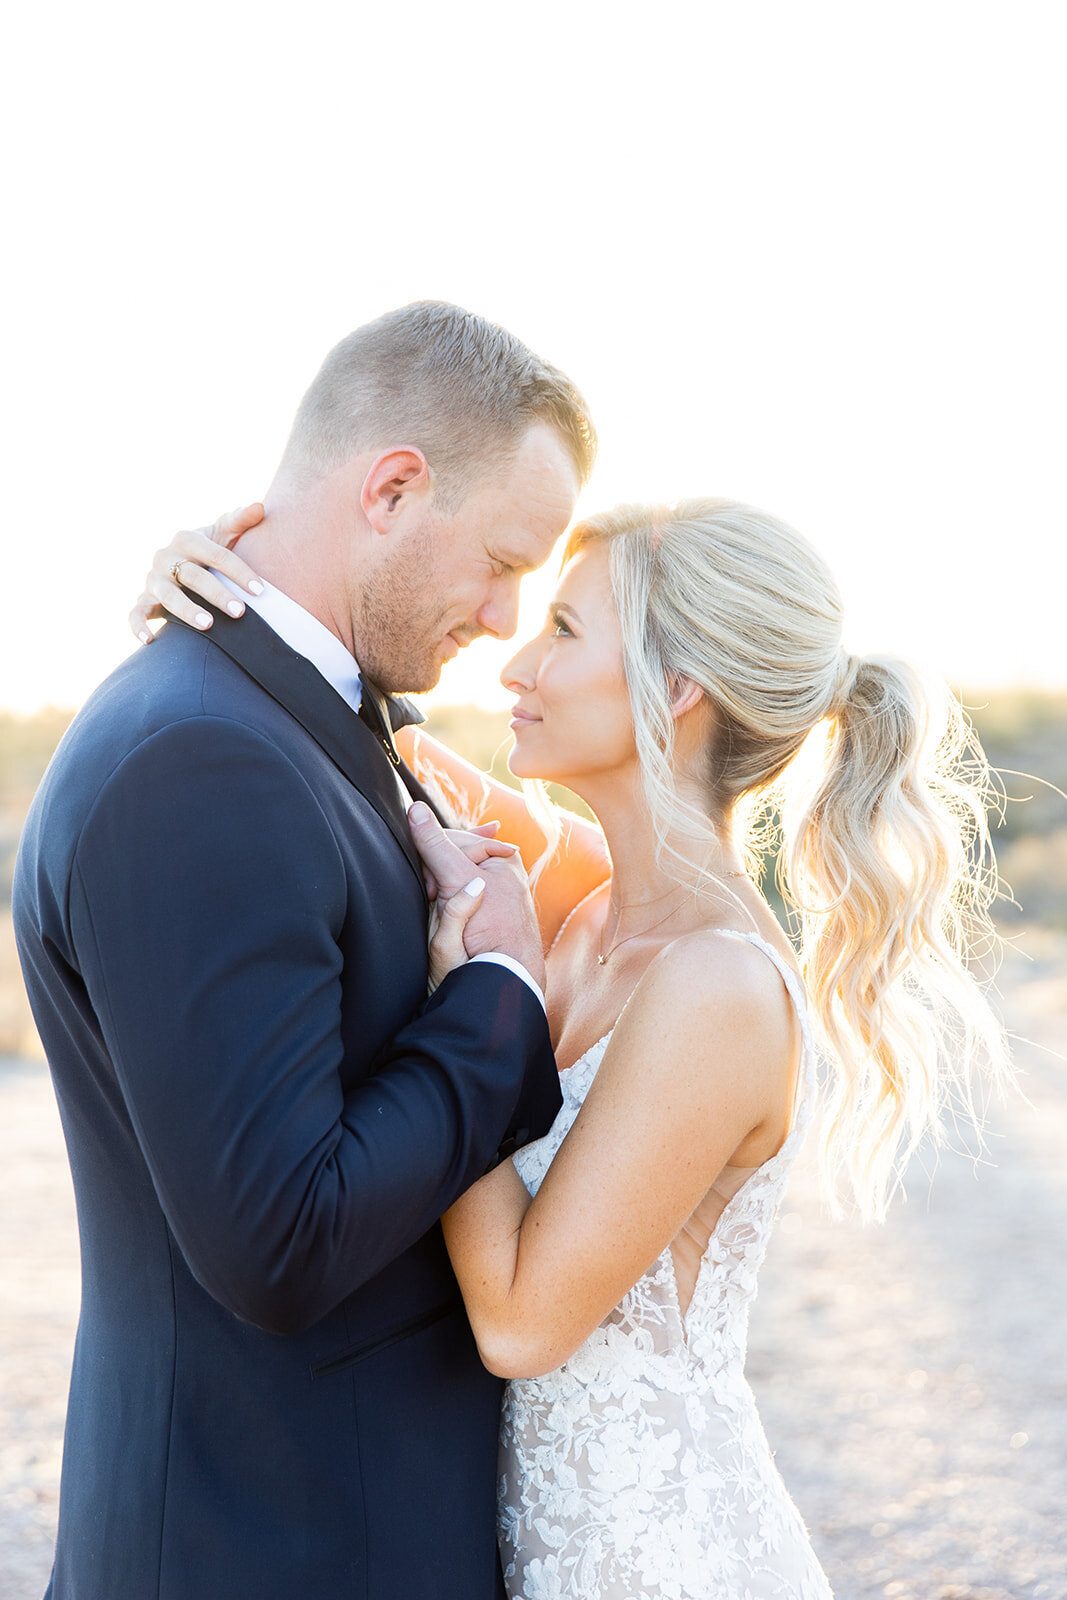 Karlie Colleen Photography - Ashley & Grant Wedding - The Paseo - Phoenix Arizona-811